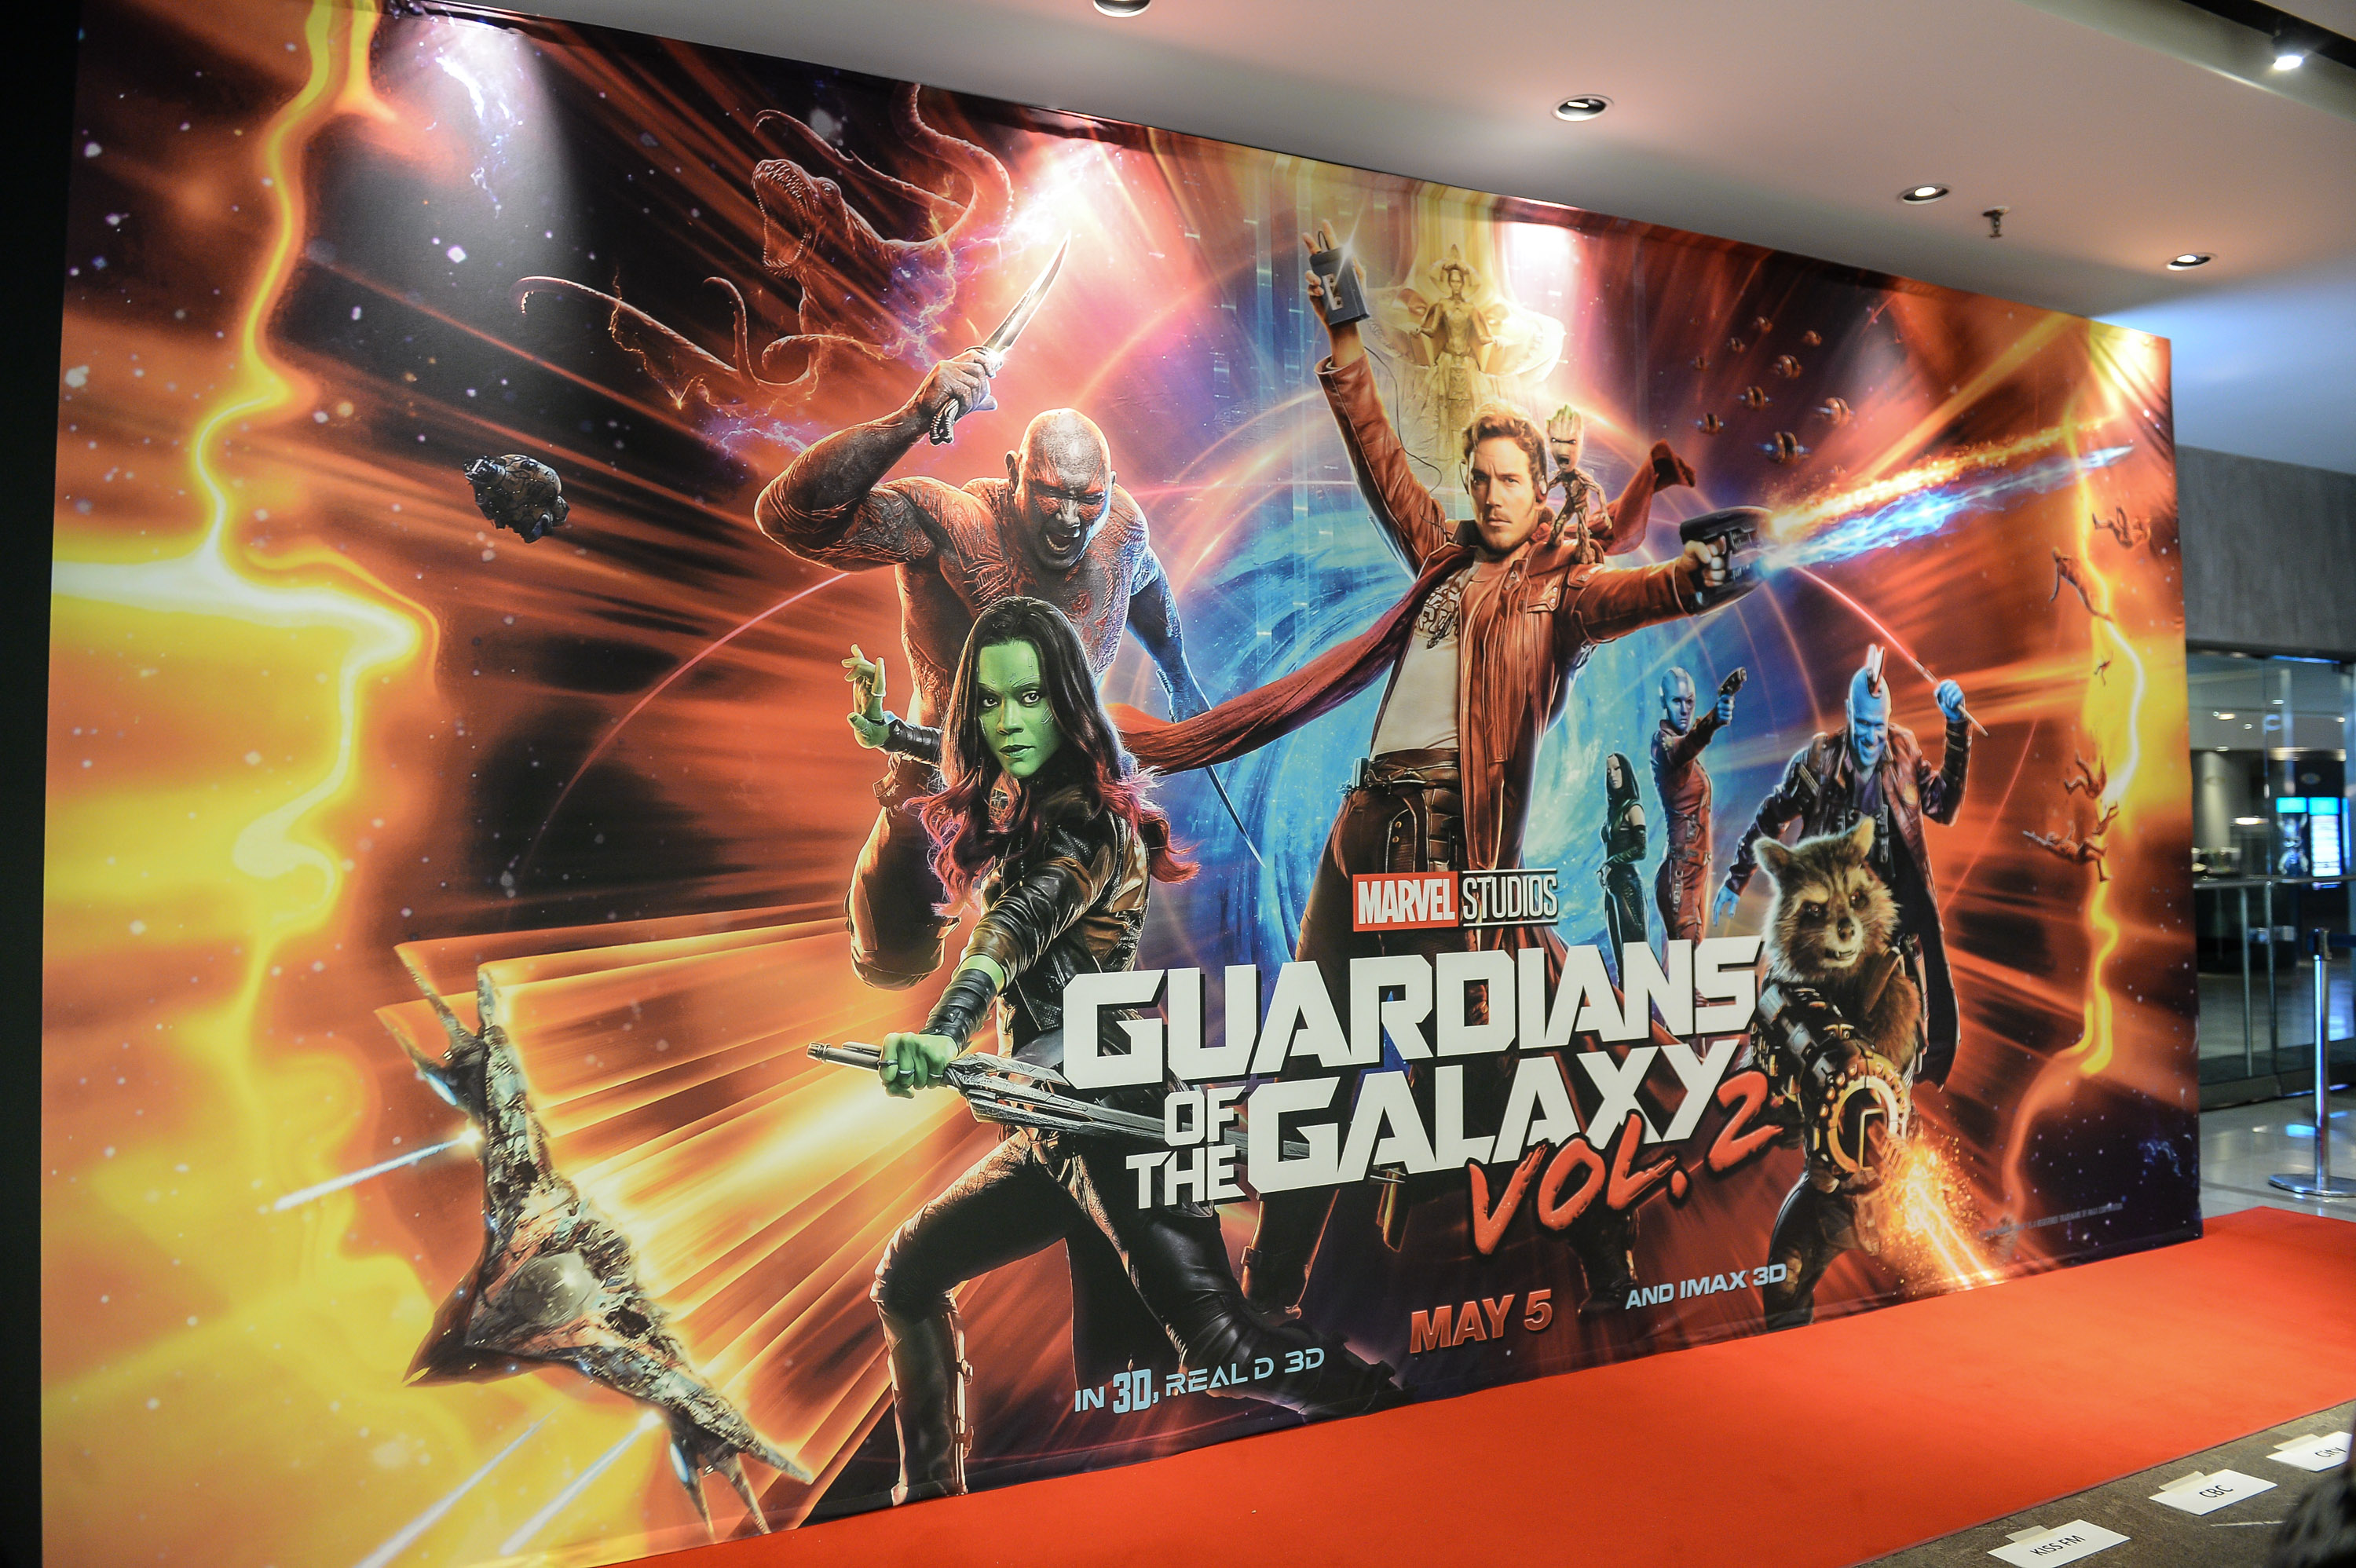 'Guardians Of The Galaxy Vol. 2' - Toronto Screening